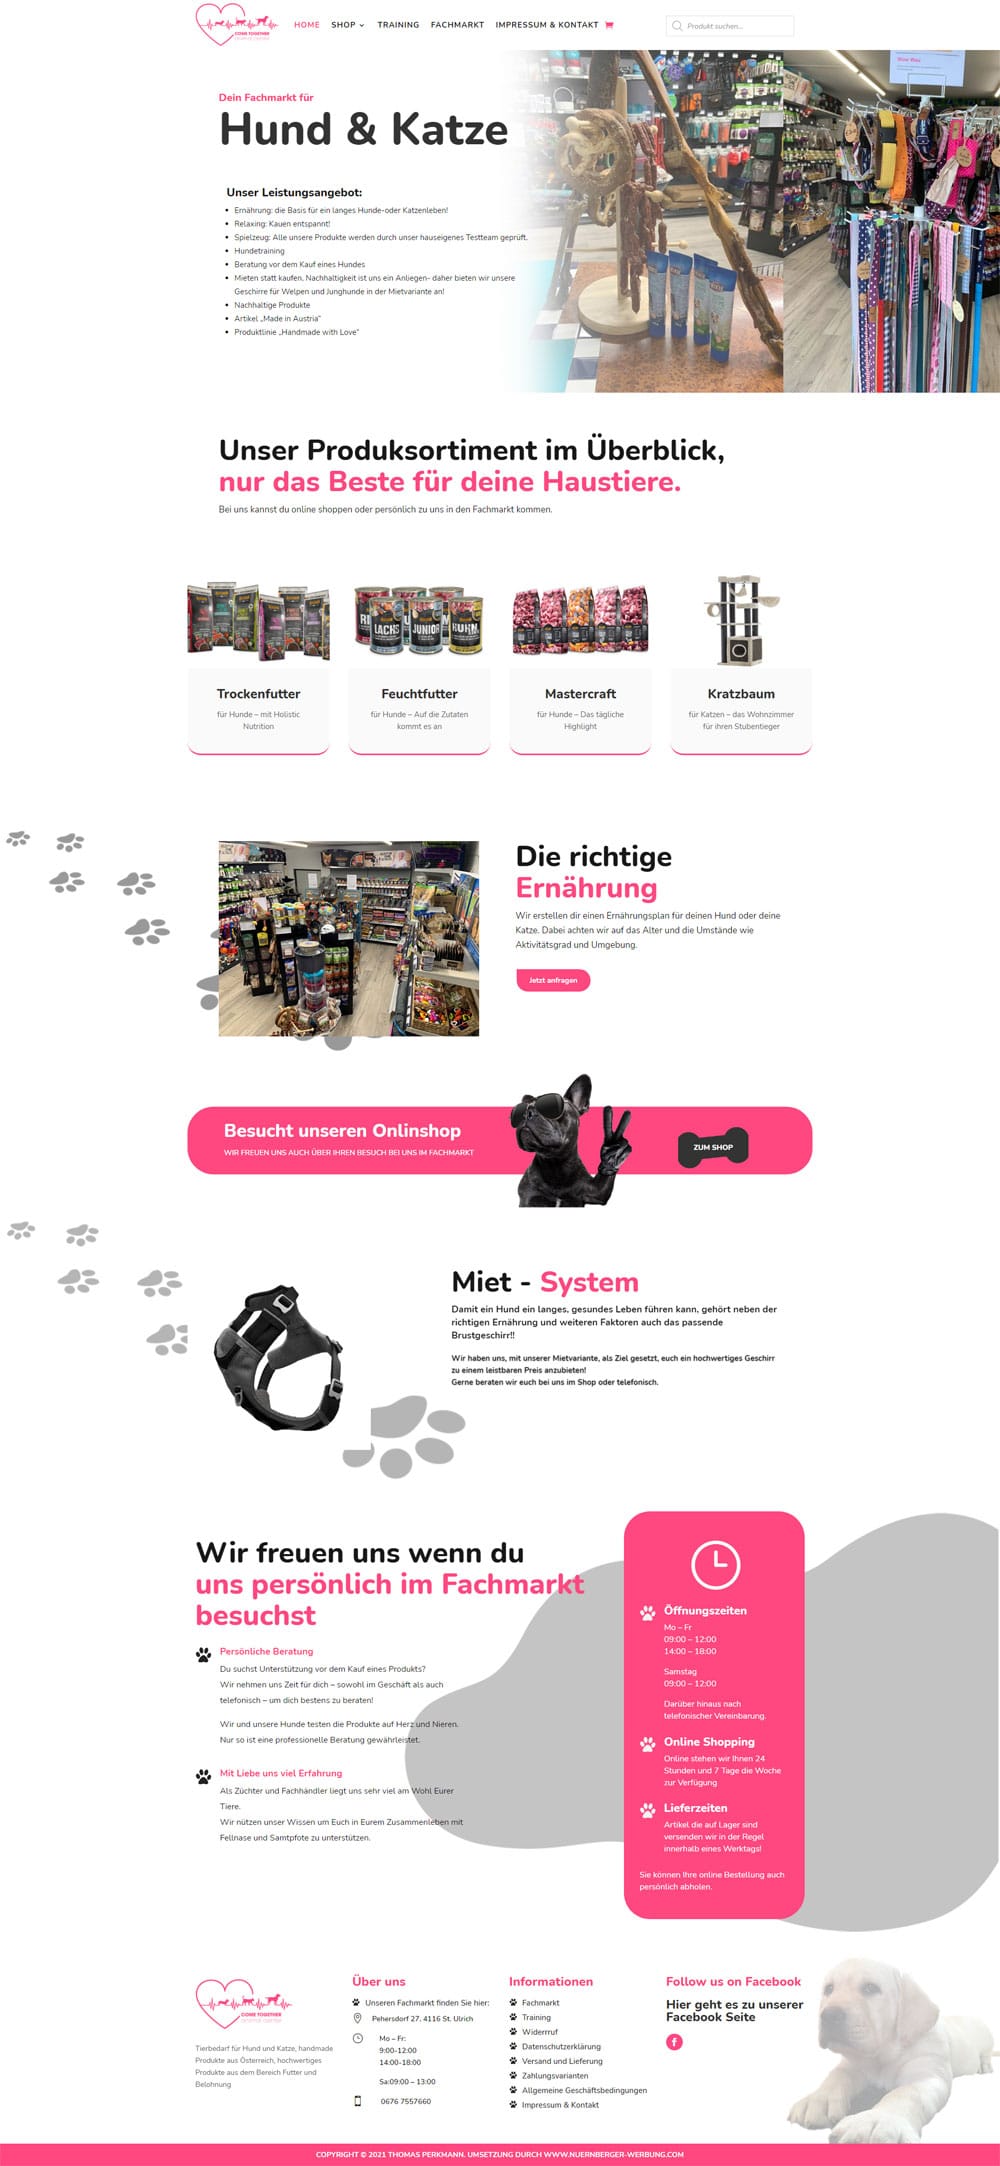 Animal Center - Referenz - Nürnberger Werbung - Online Shop - Agentur